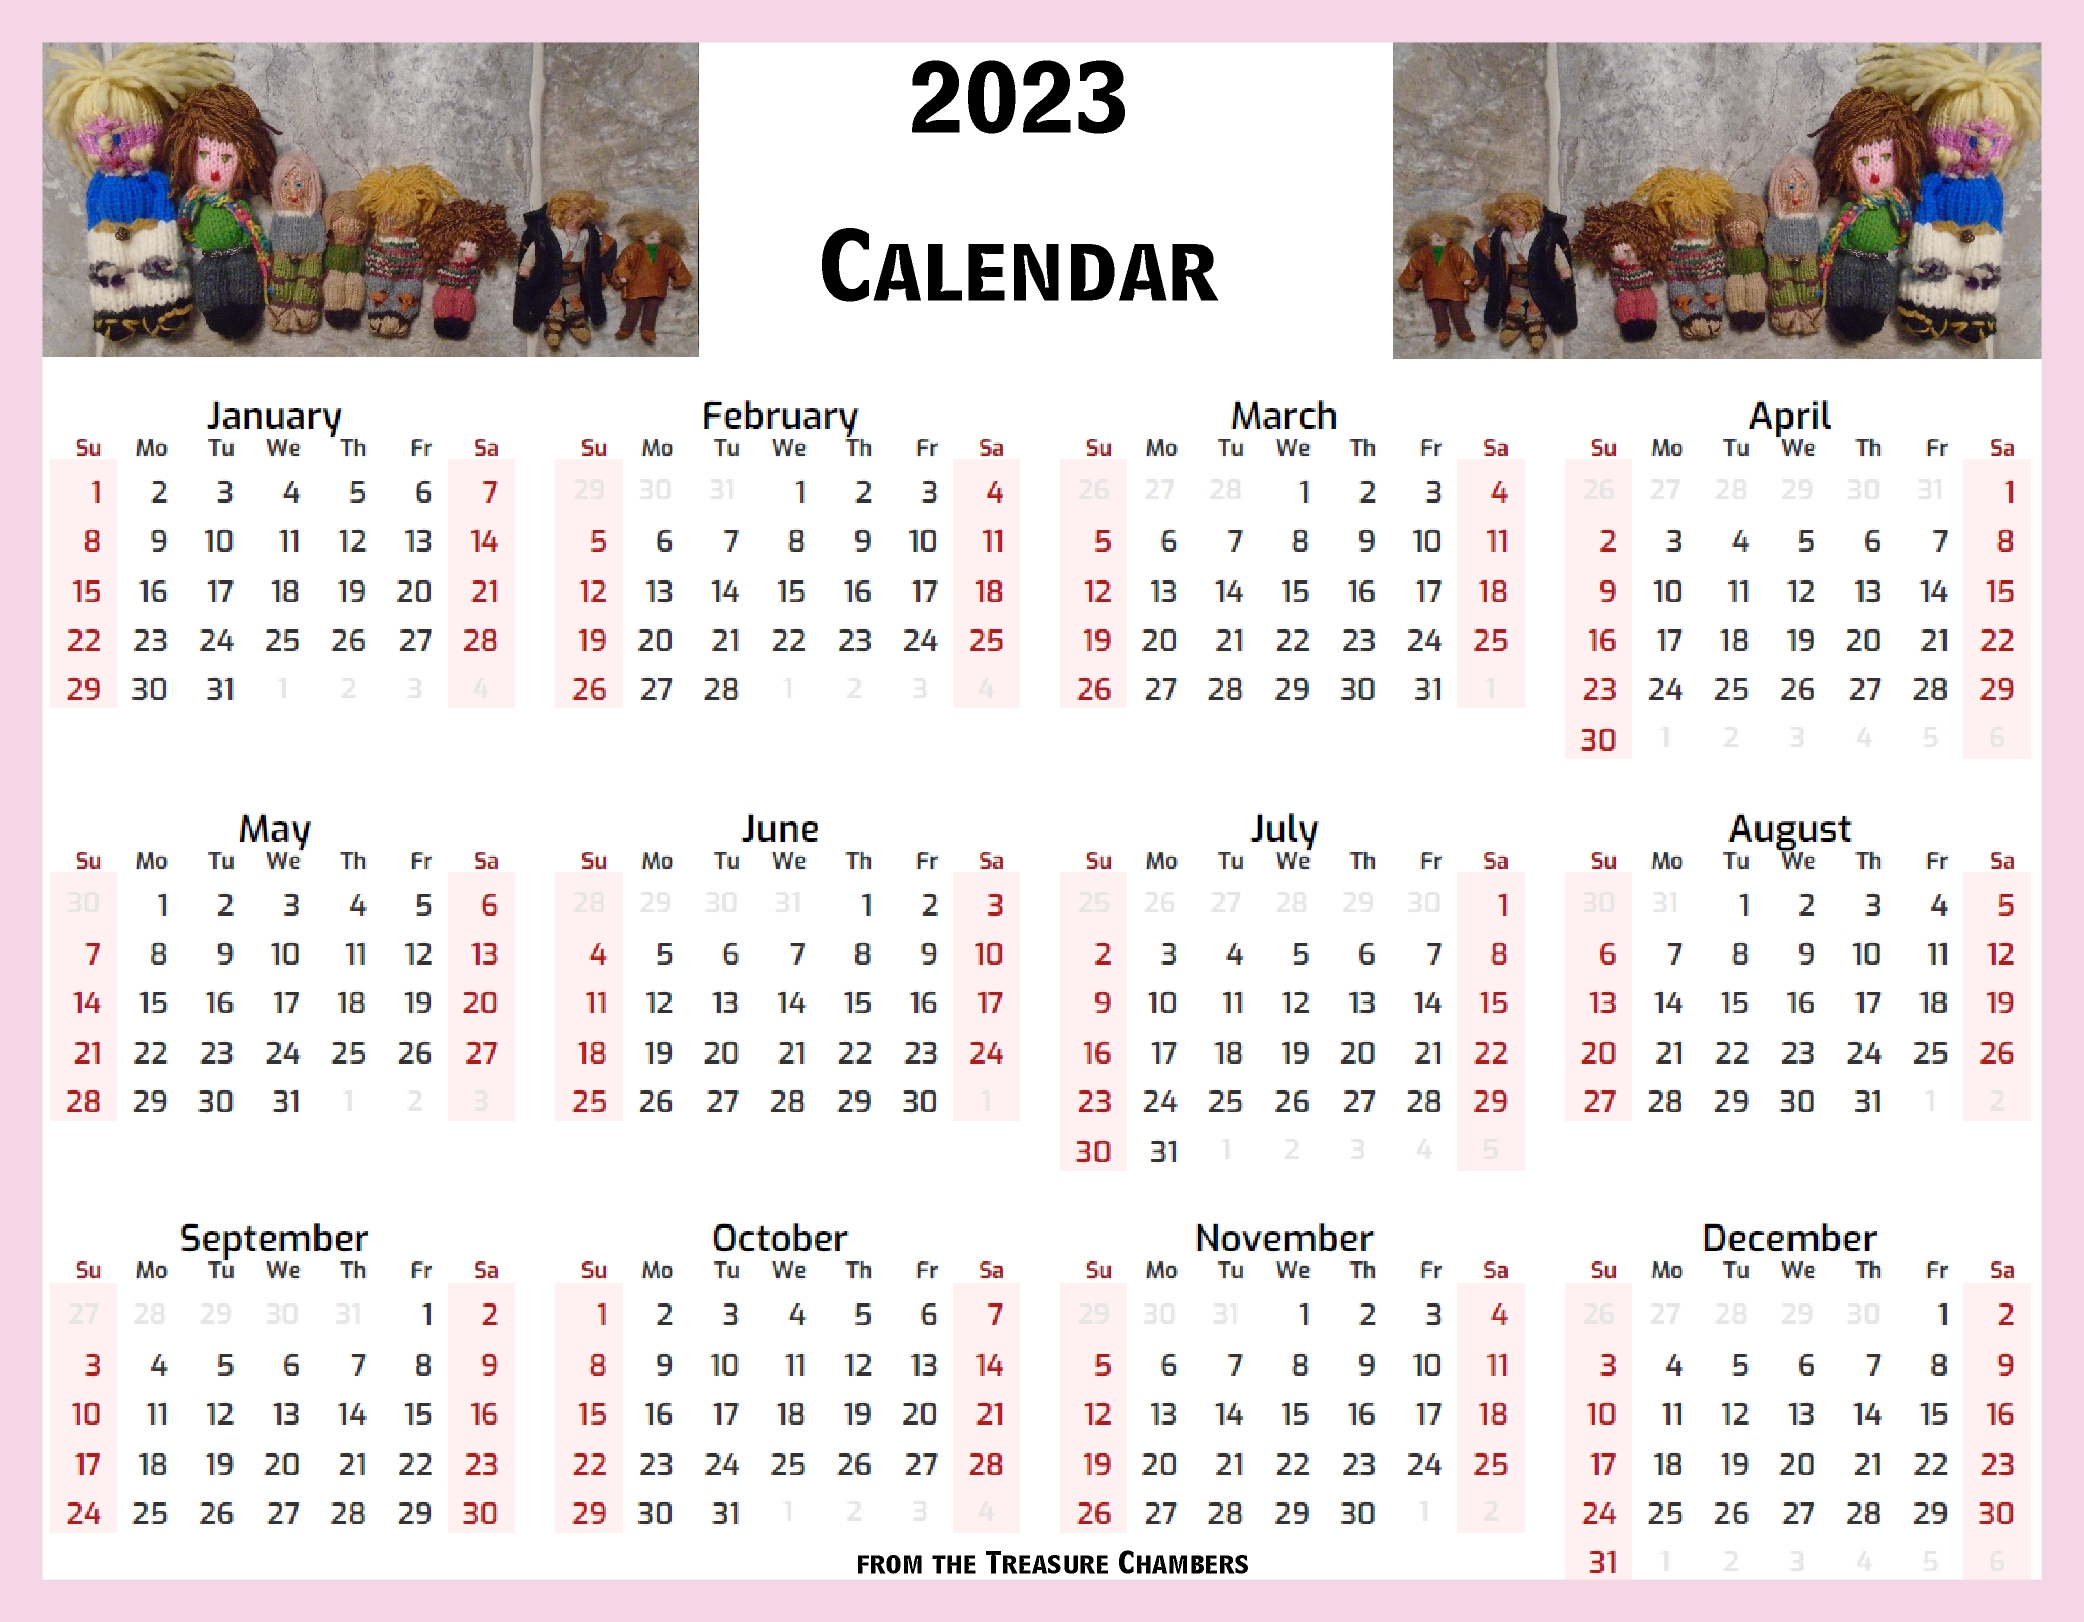 2033 calendar